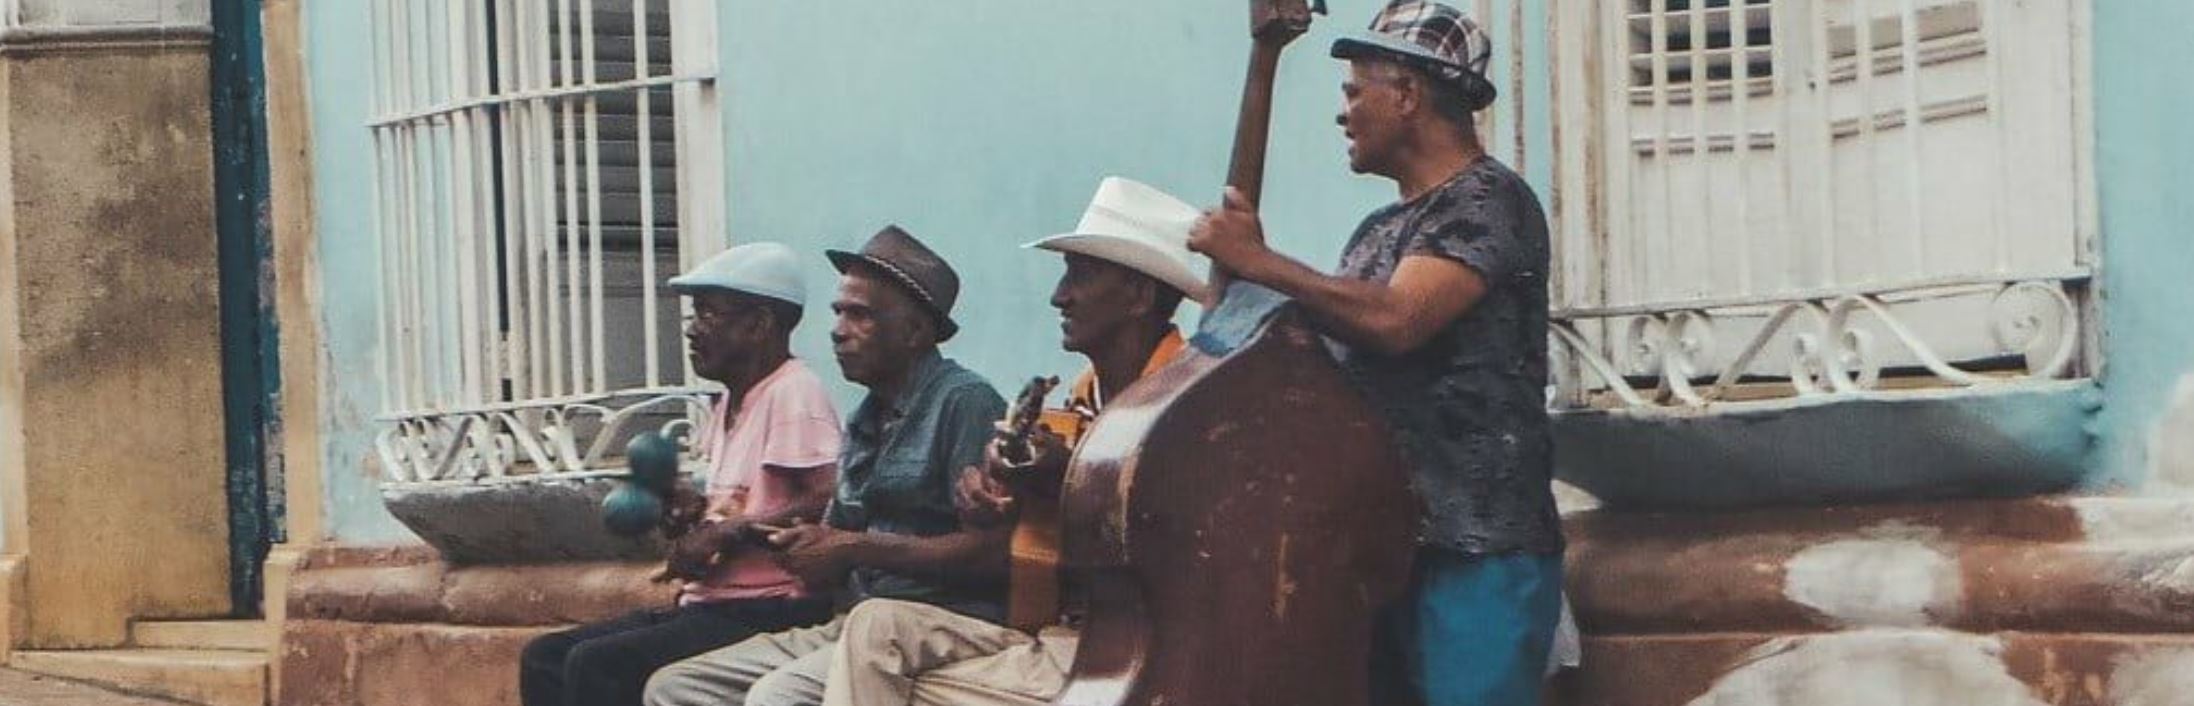 Kubas Straßenmusiker in Trinidad